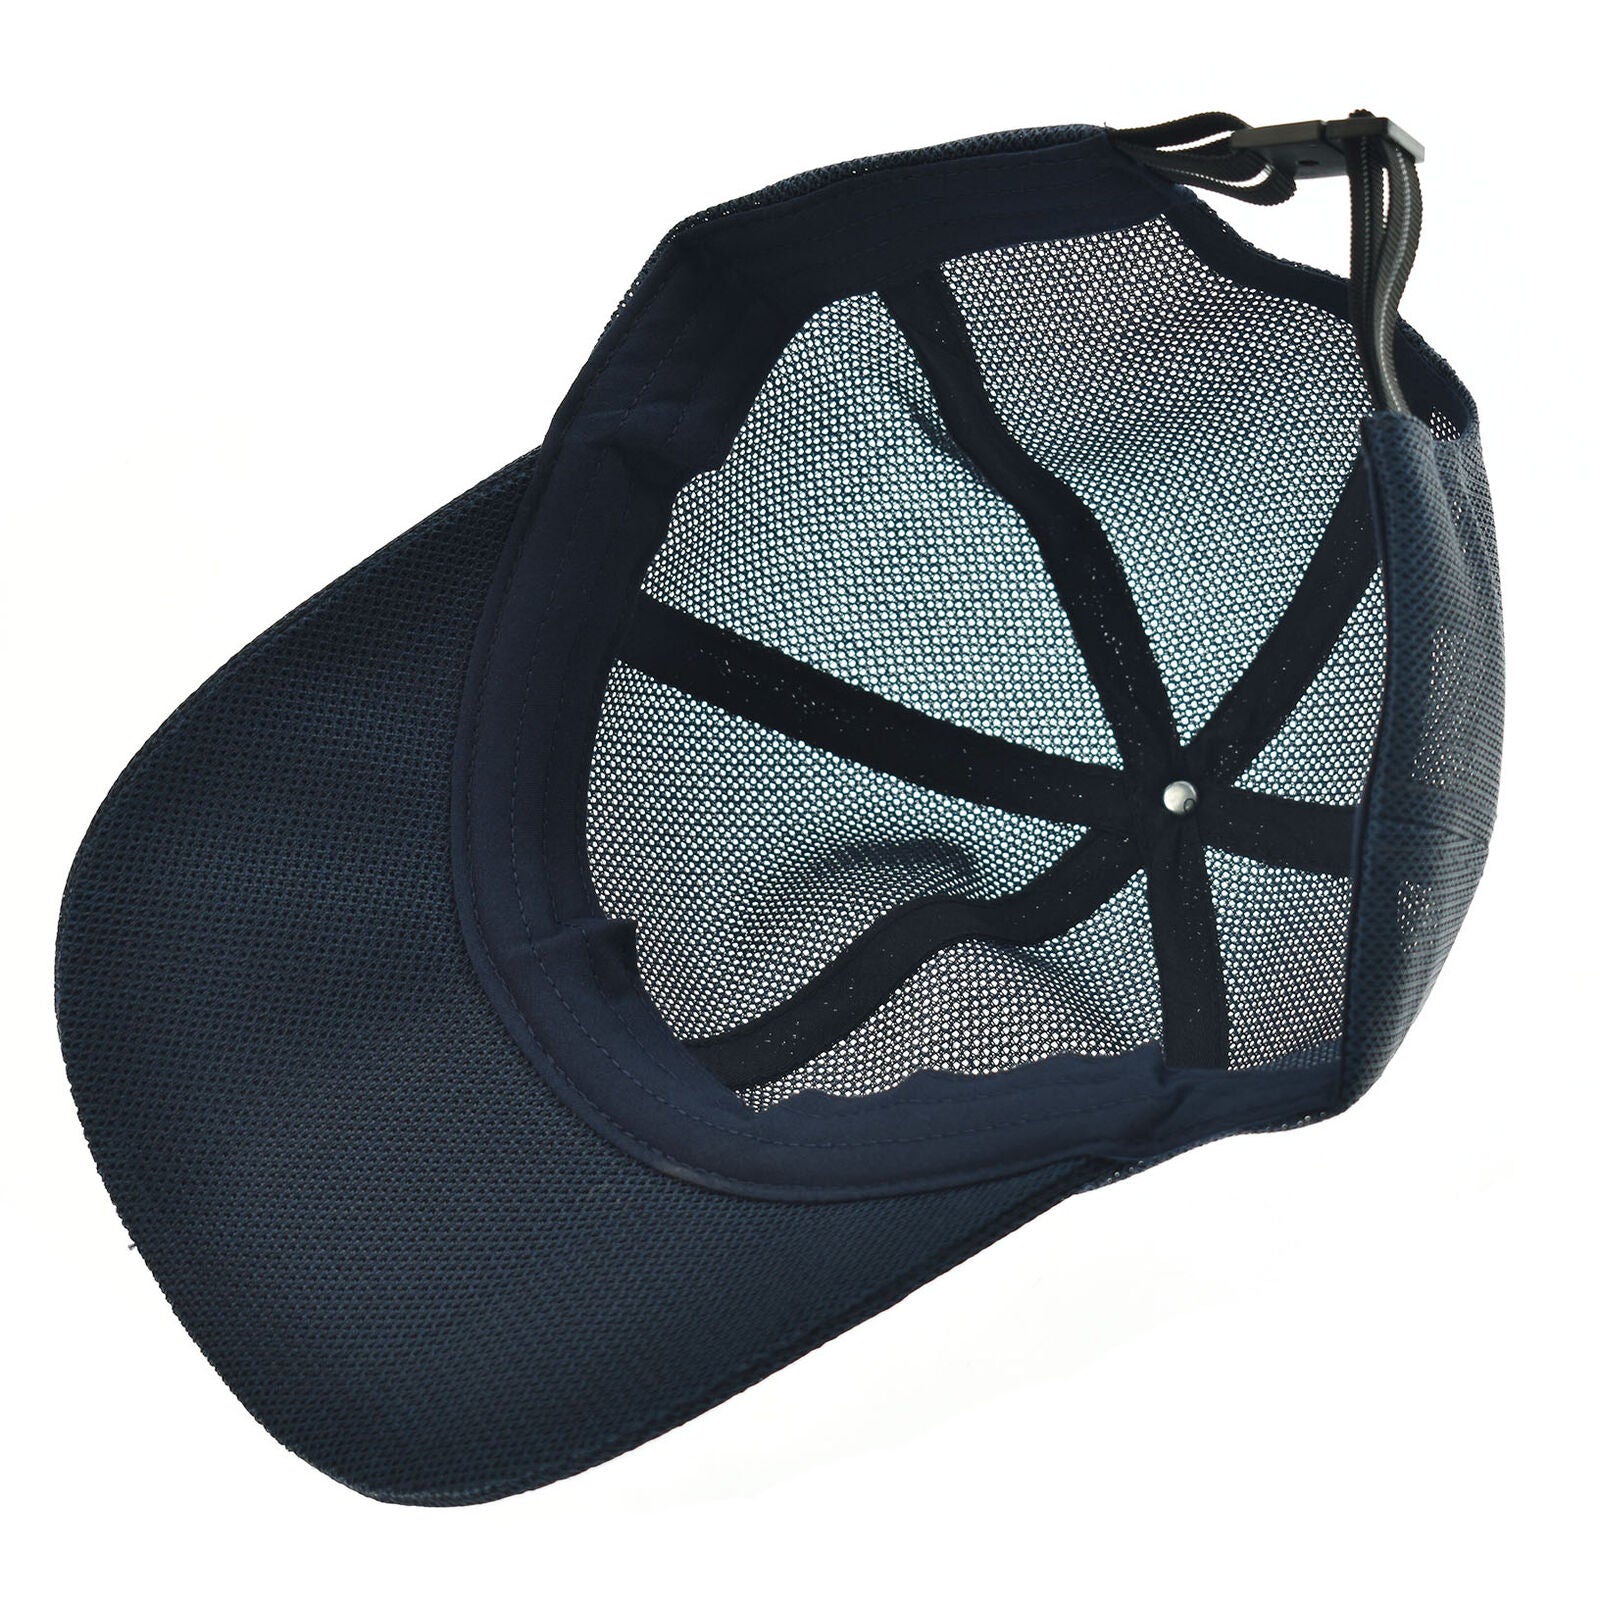 Men's Baseball Cap Golf Cap Breathable Sun Protection For Sports Travel